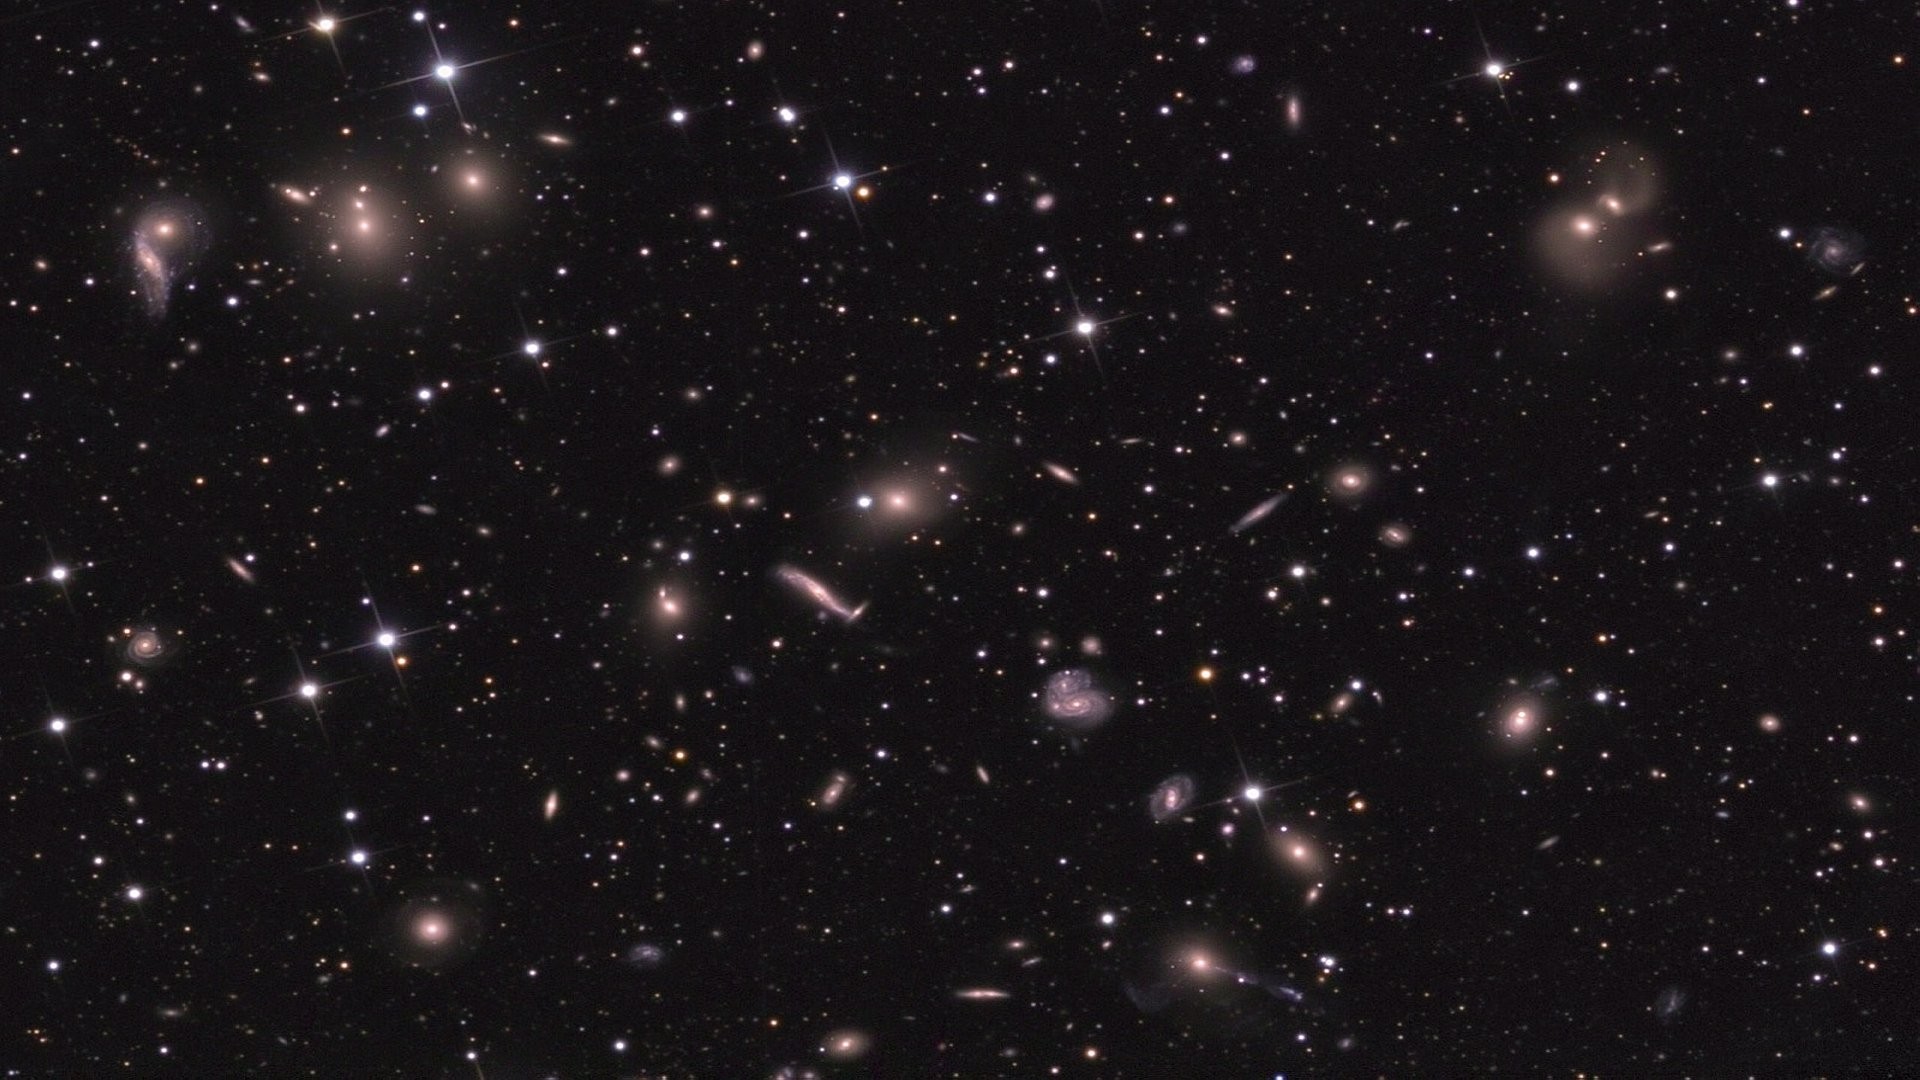 1920x1080 Star wars wallpaper wallpapers war pixel galaxy galaxies space hercules  large cluster.